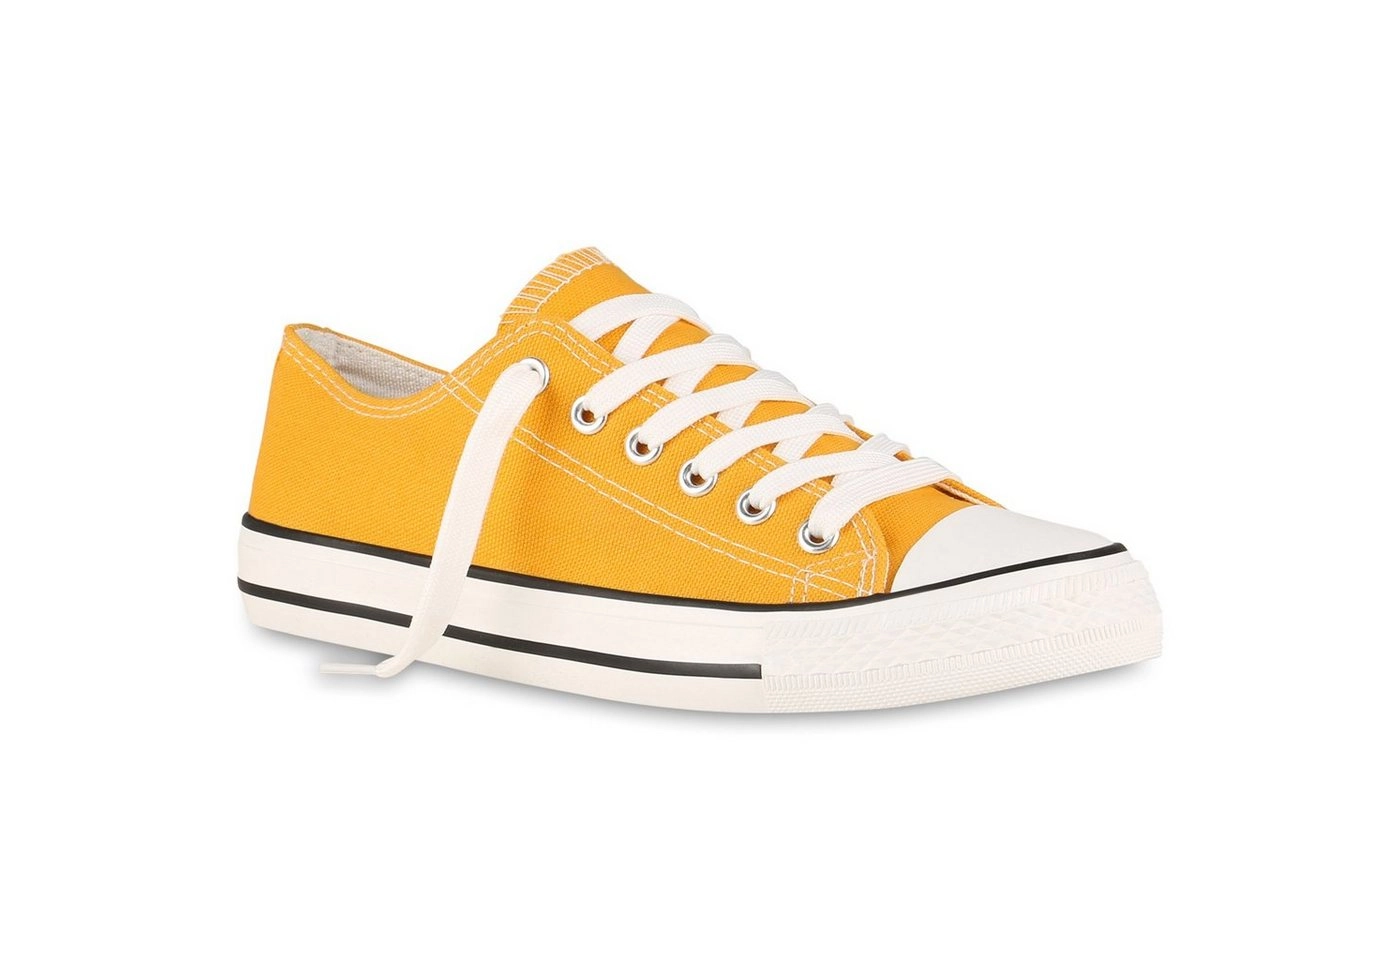 VAN HILL »97316 MS E-4 Damen Sneaker-ebay« Stiefel Bequeme Schuhe